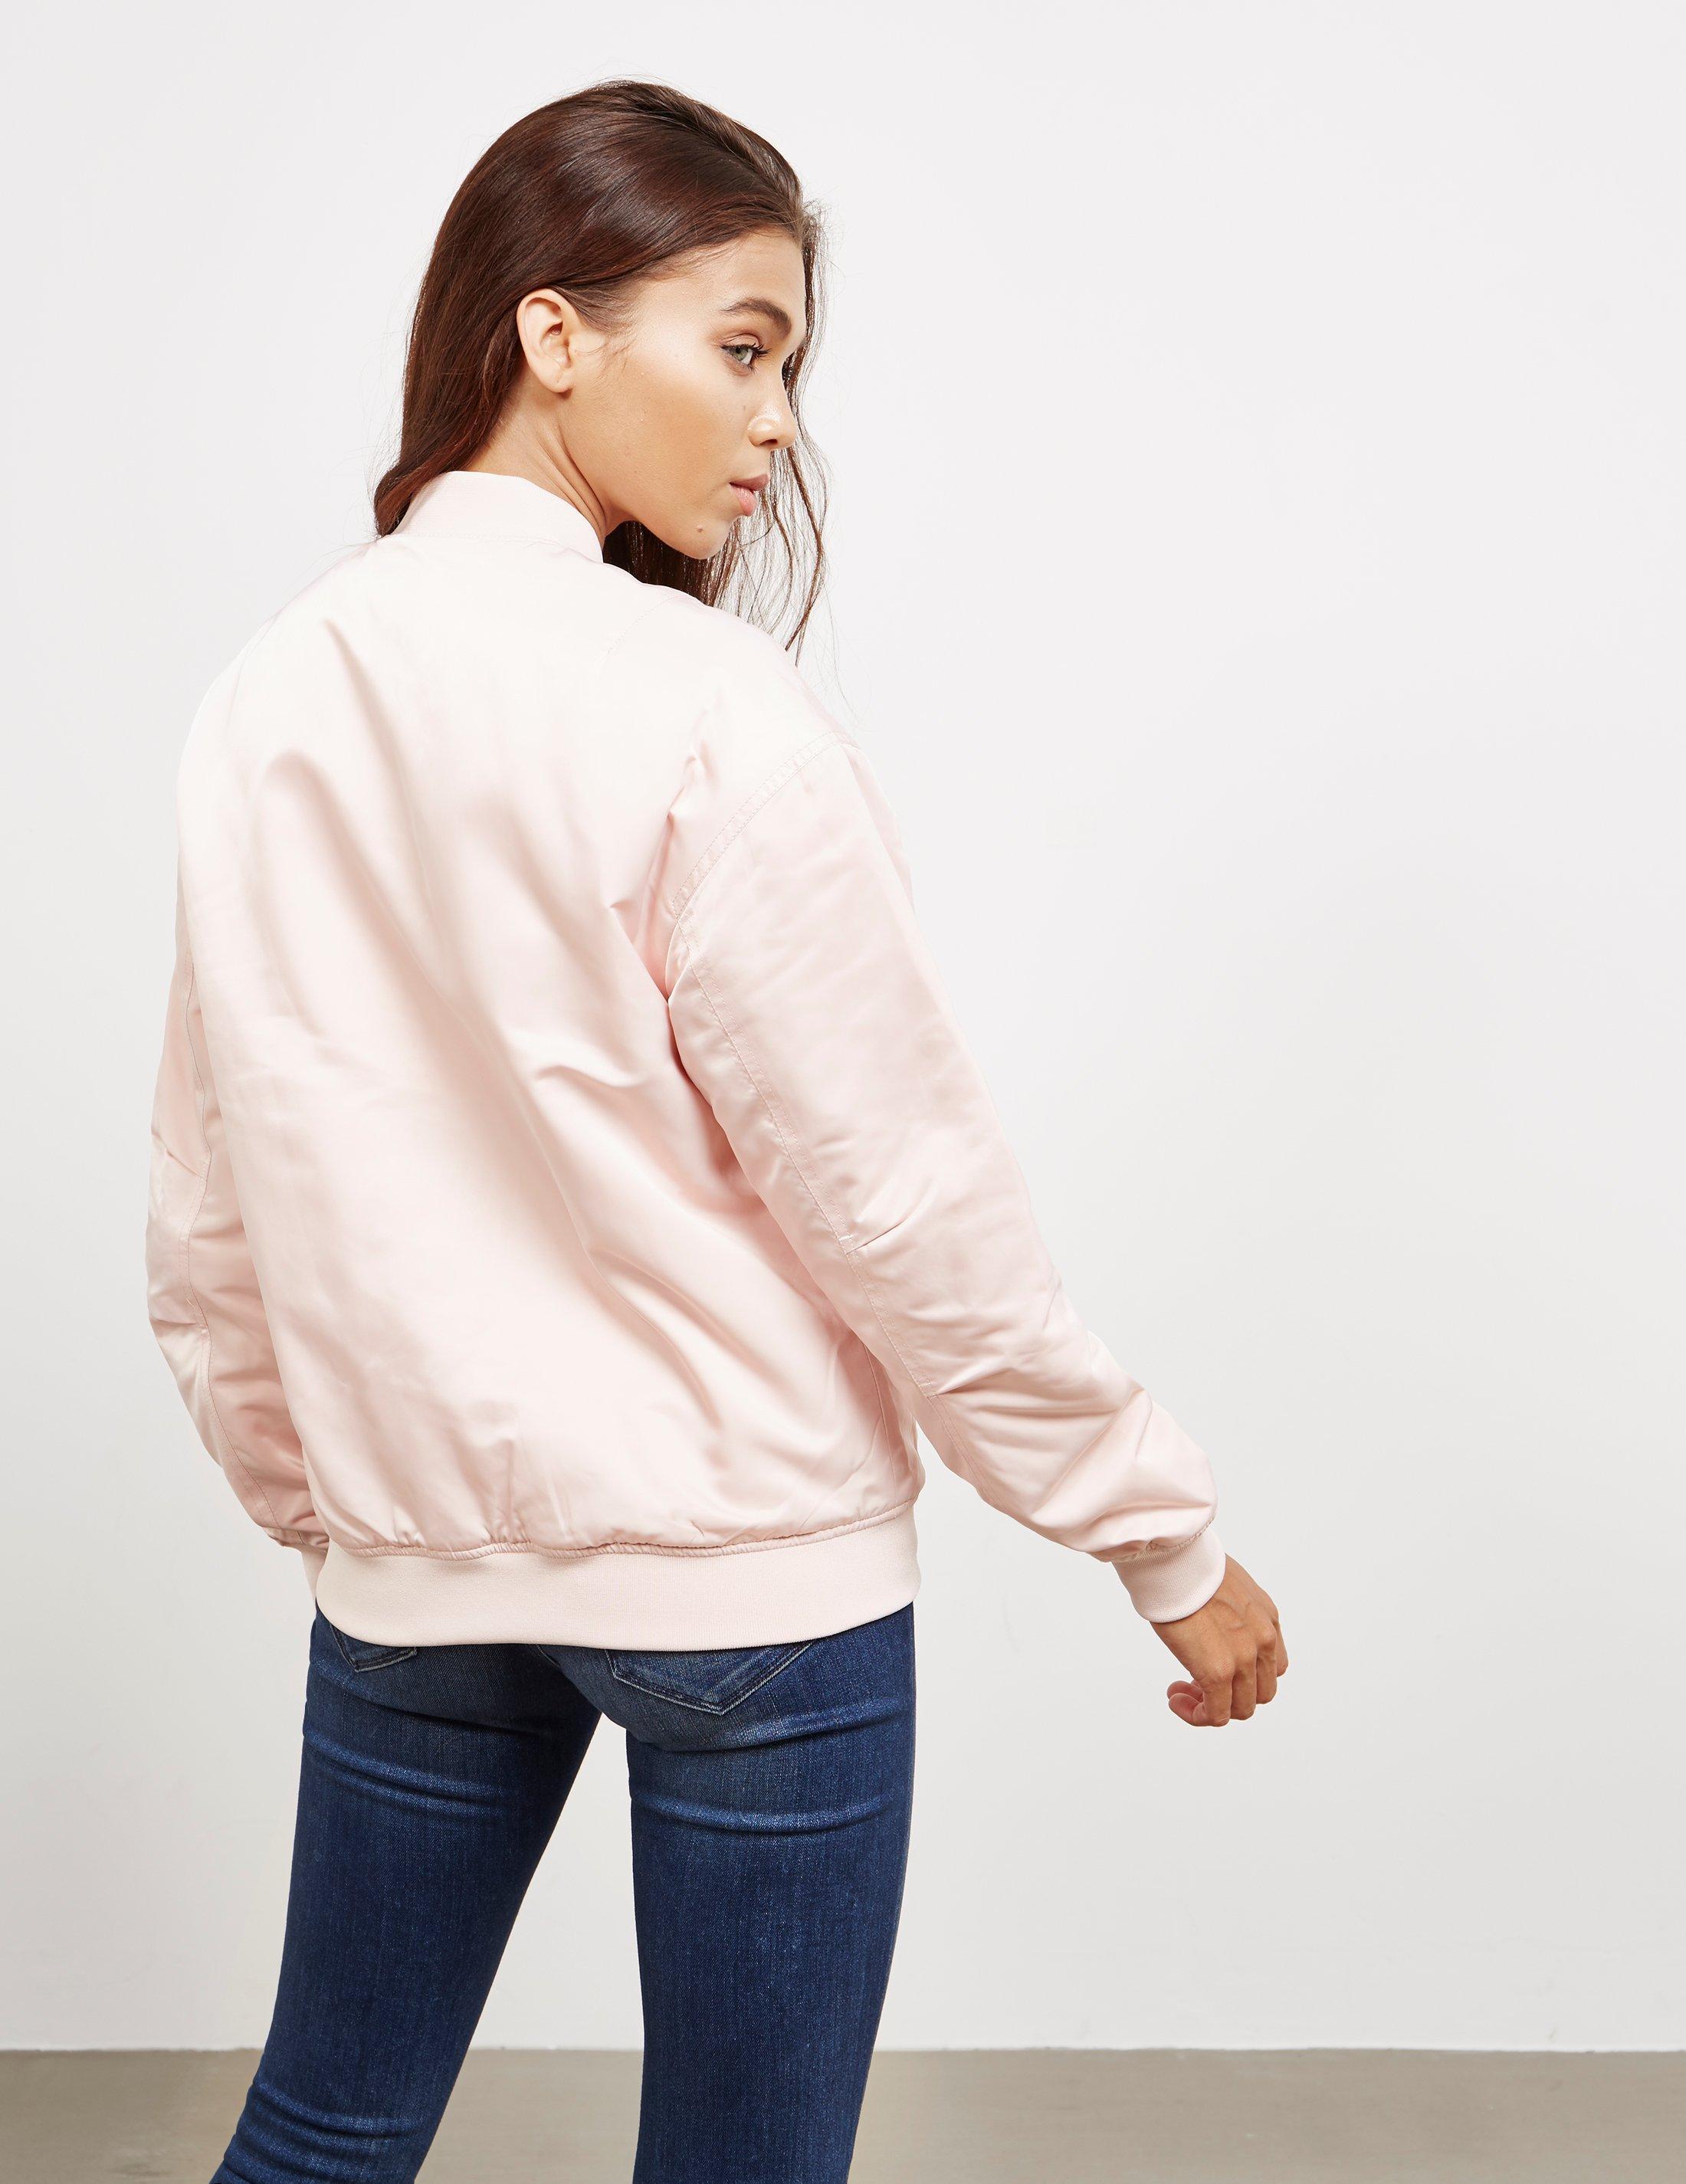 Calvin Klein Pink Bomber Jacket Deals, GET 53% OFF, dh-o.com